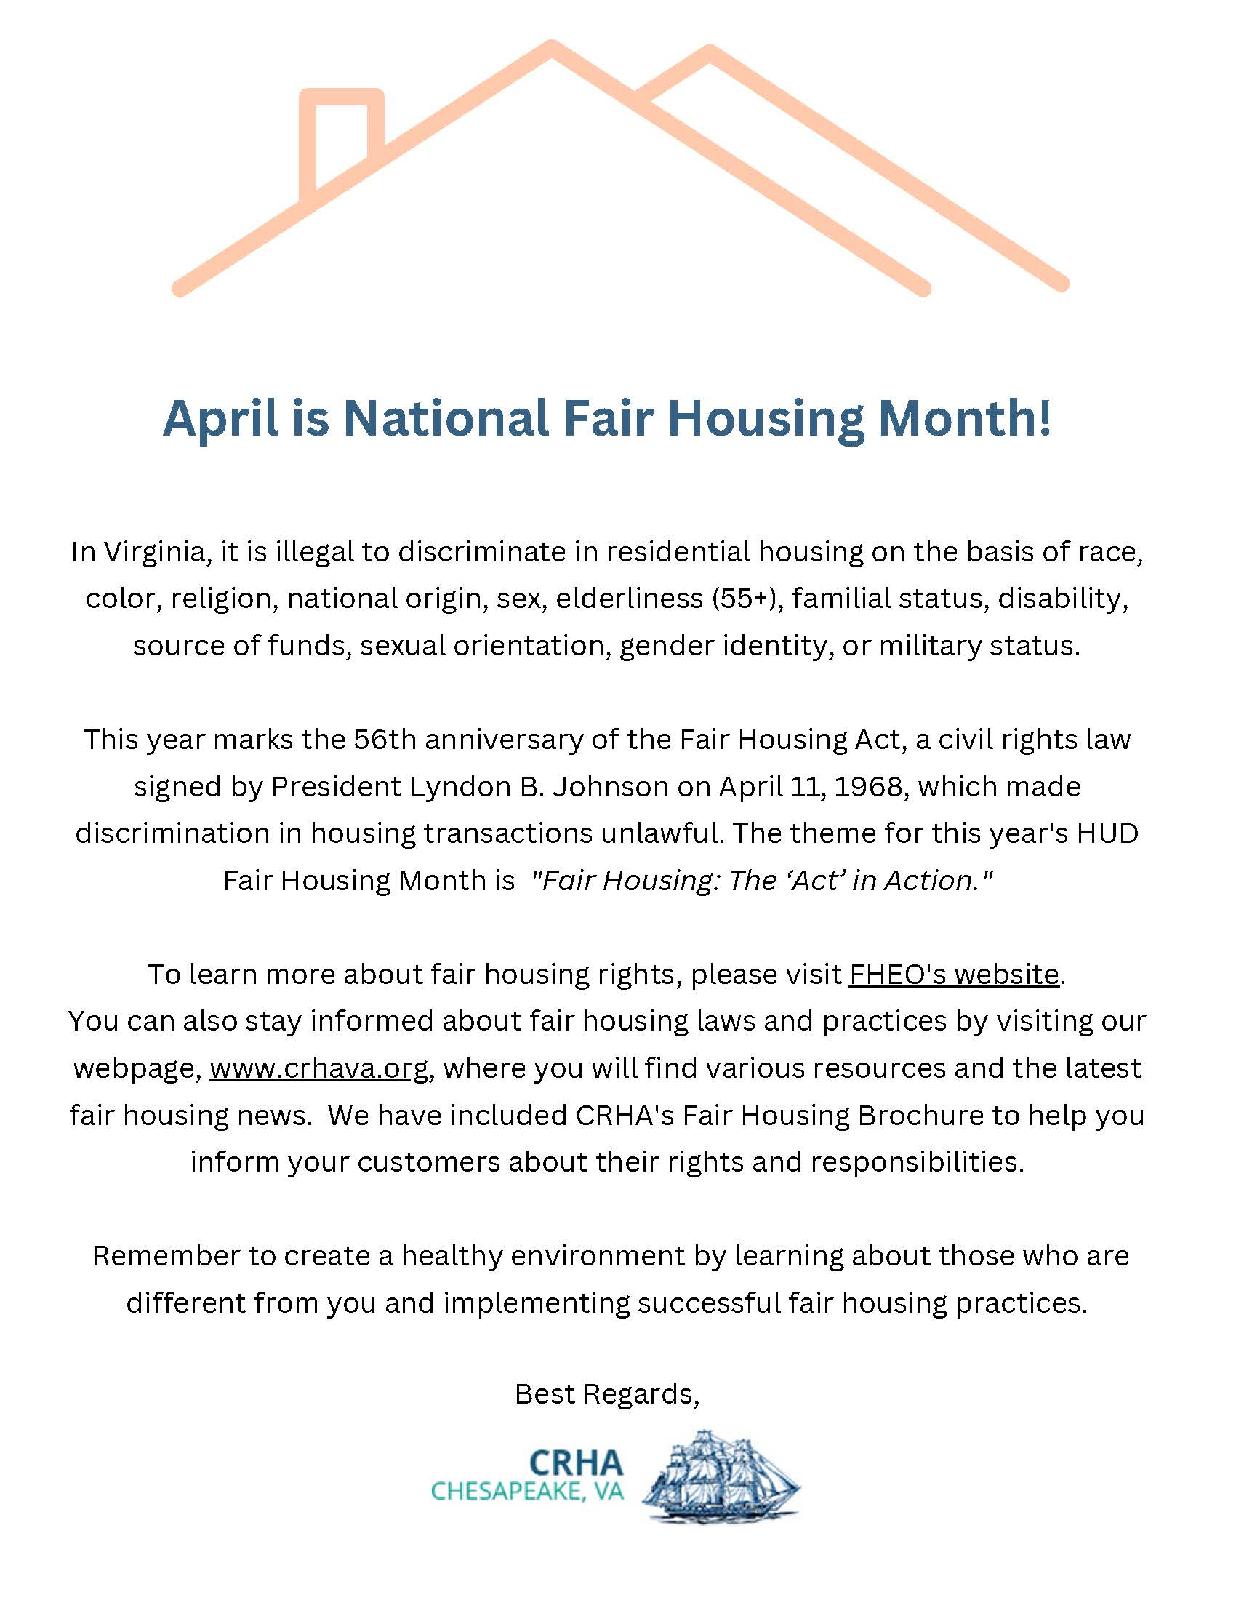 April is National Fair Housing Month! CRHA